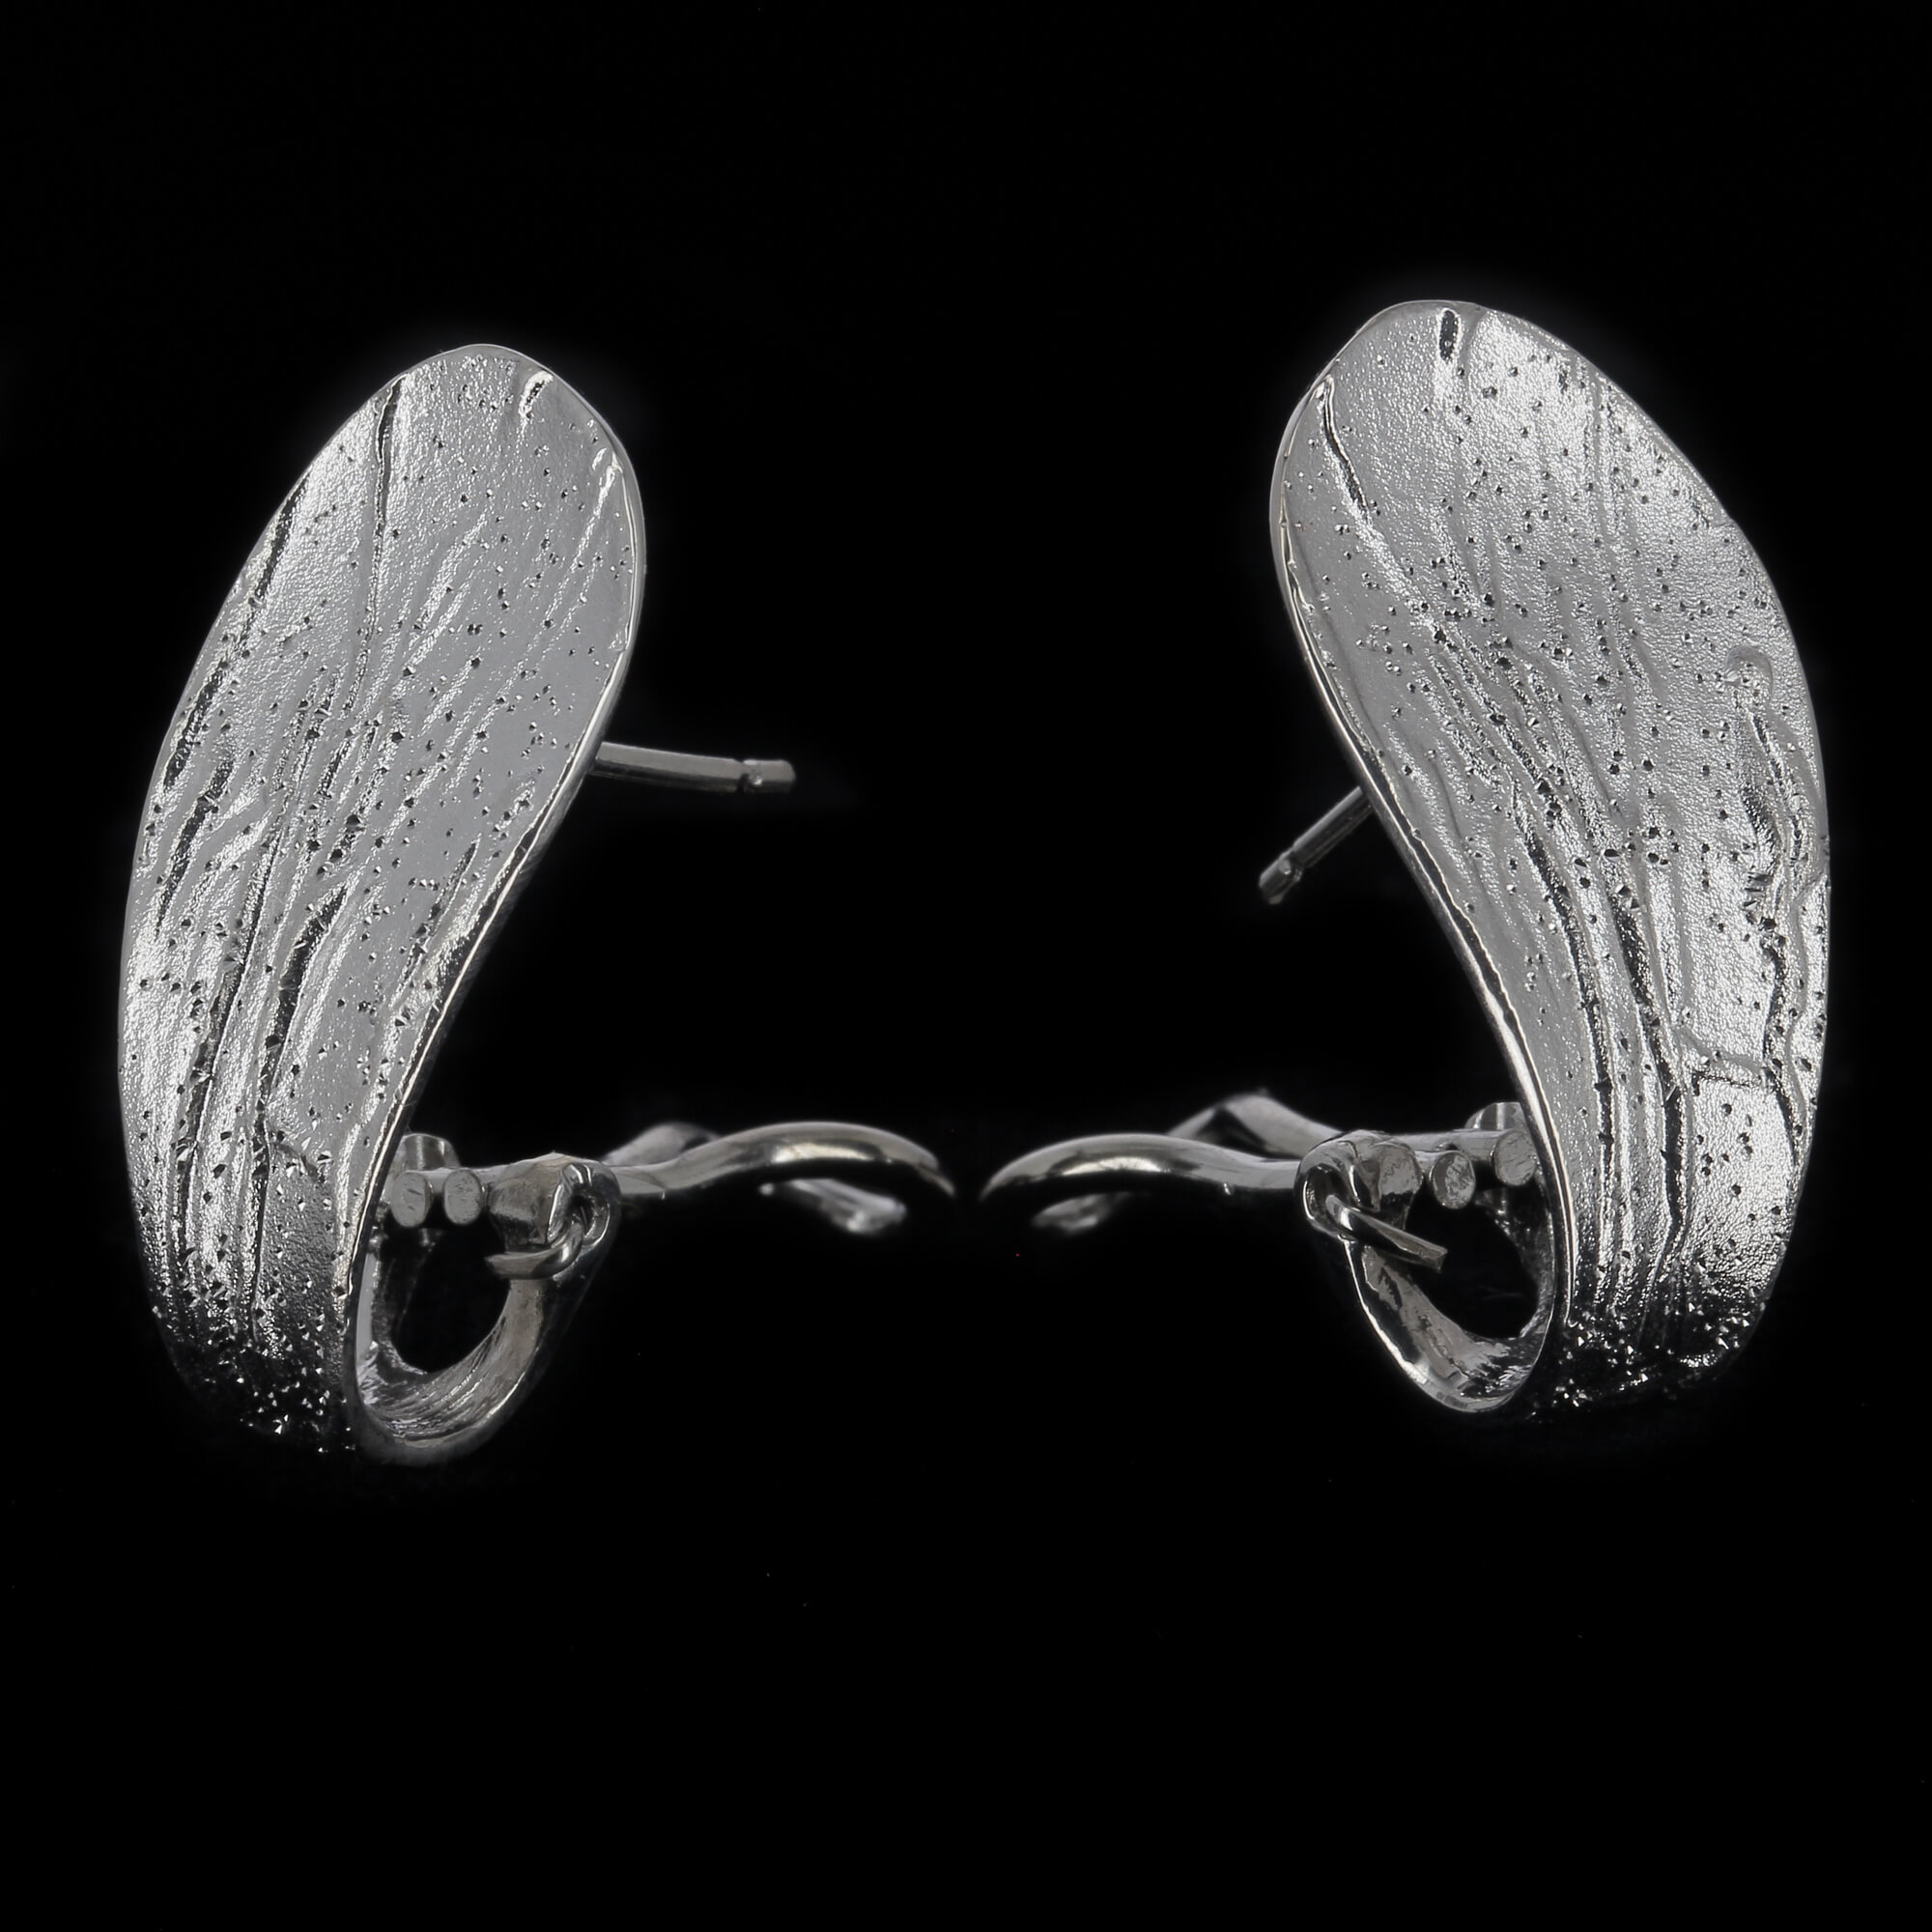 Silver and Diamonded Earrings in Dropform